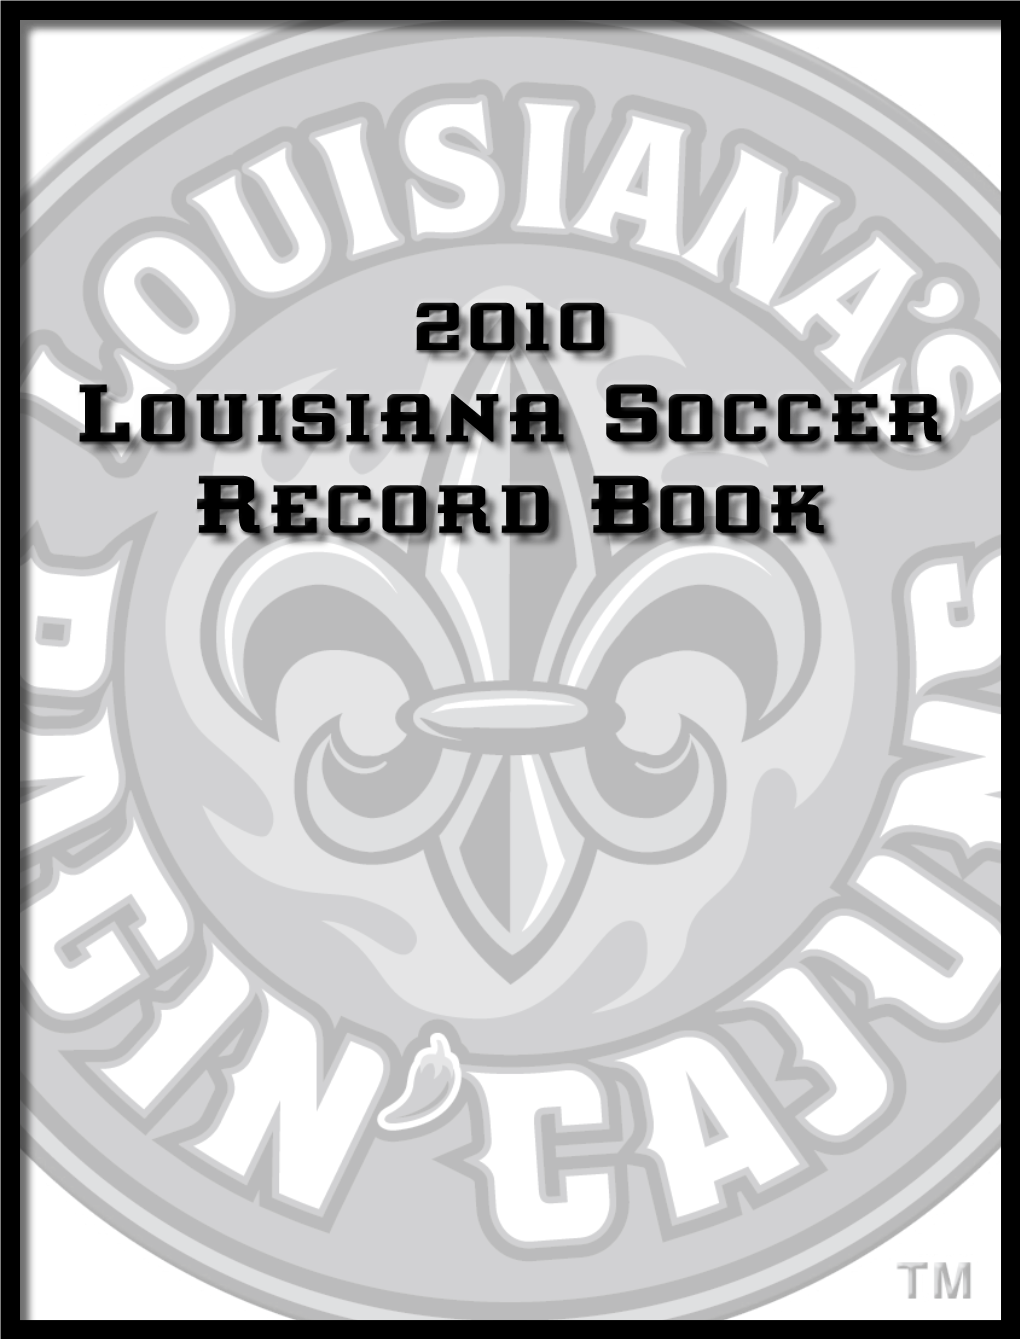 2010 Louisiana Soccer Record Book 2010 RAGIN’ CAJUNS SOCCER RECORD BOOK